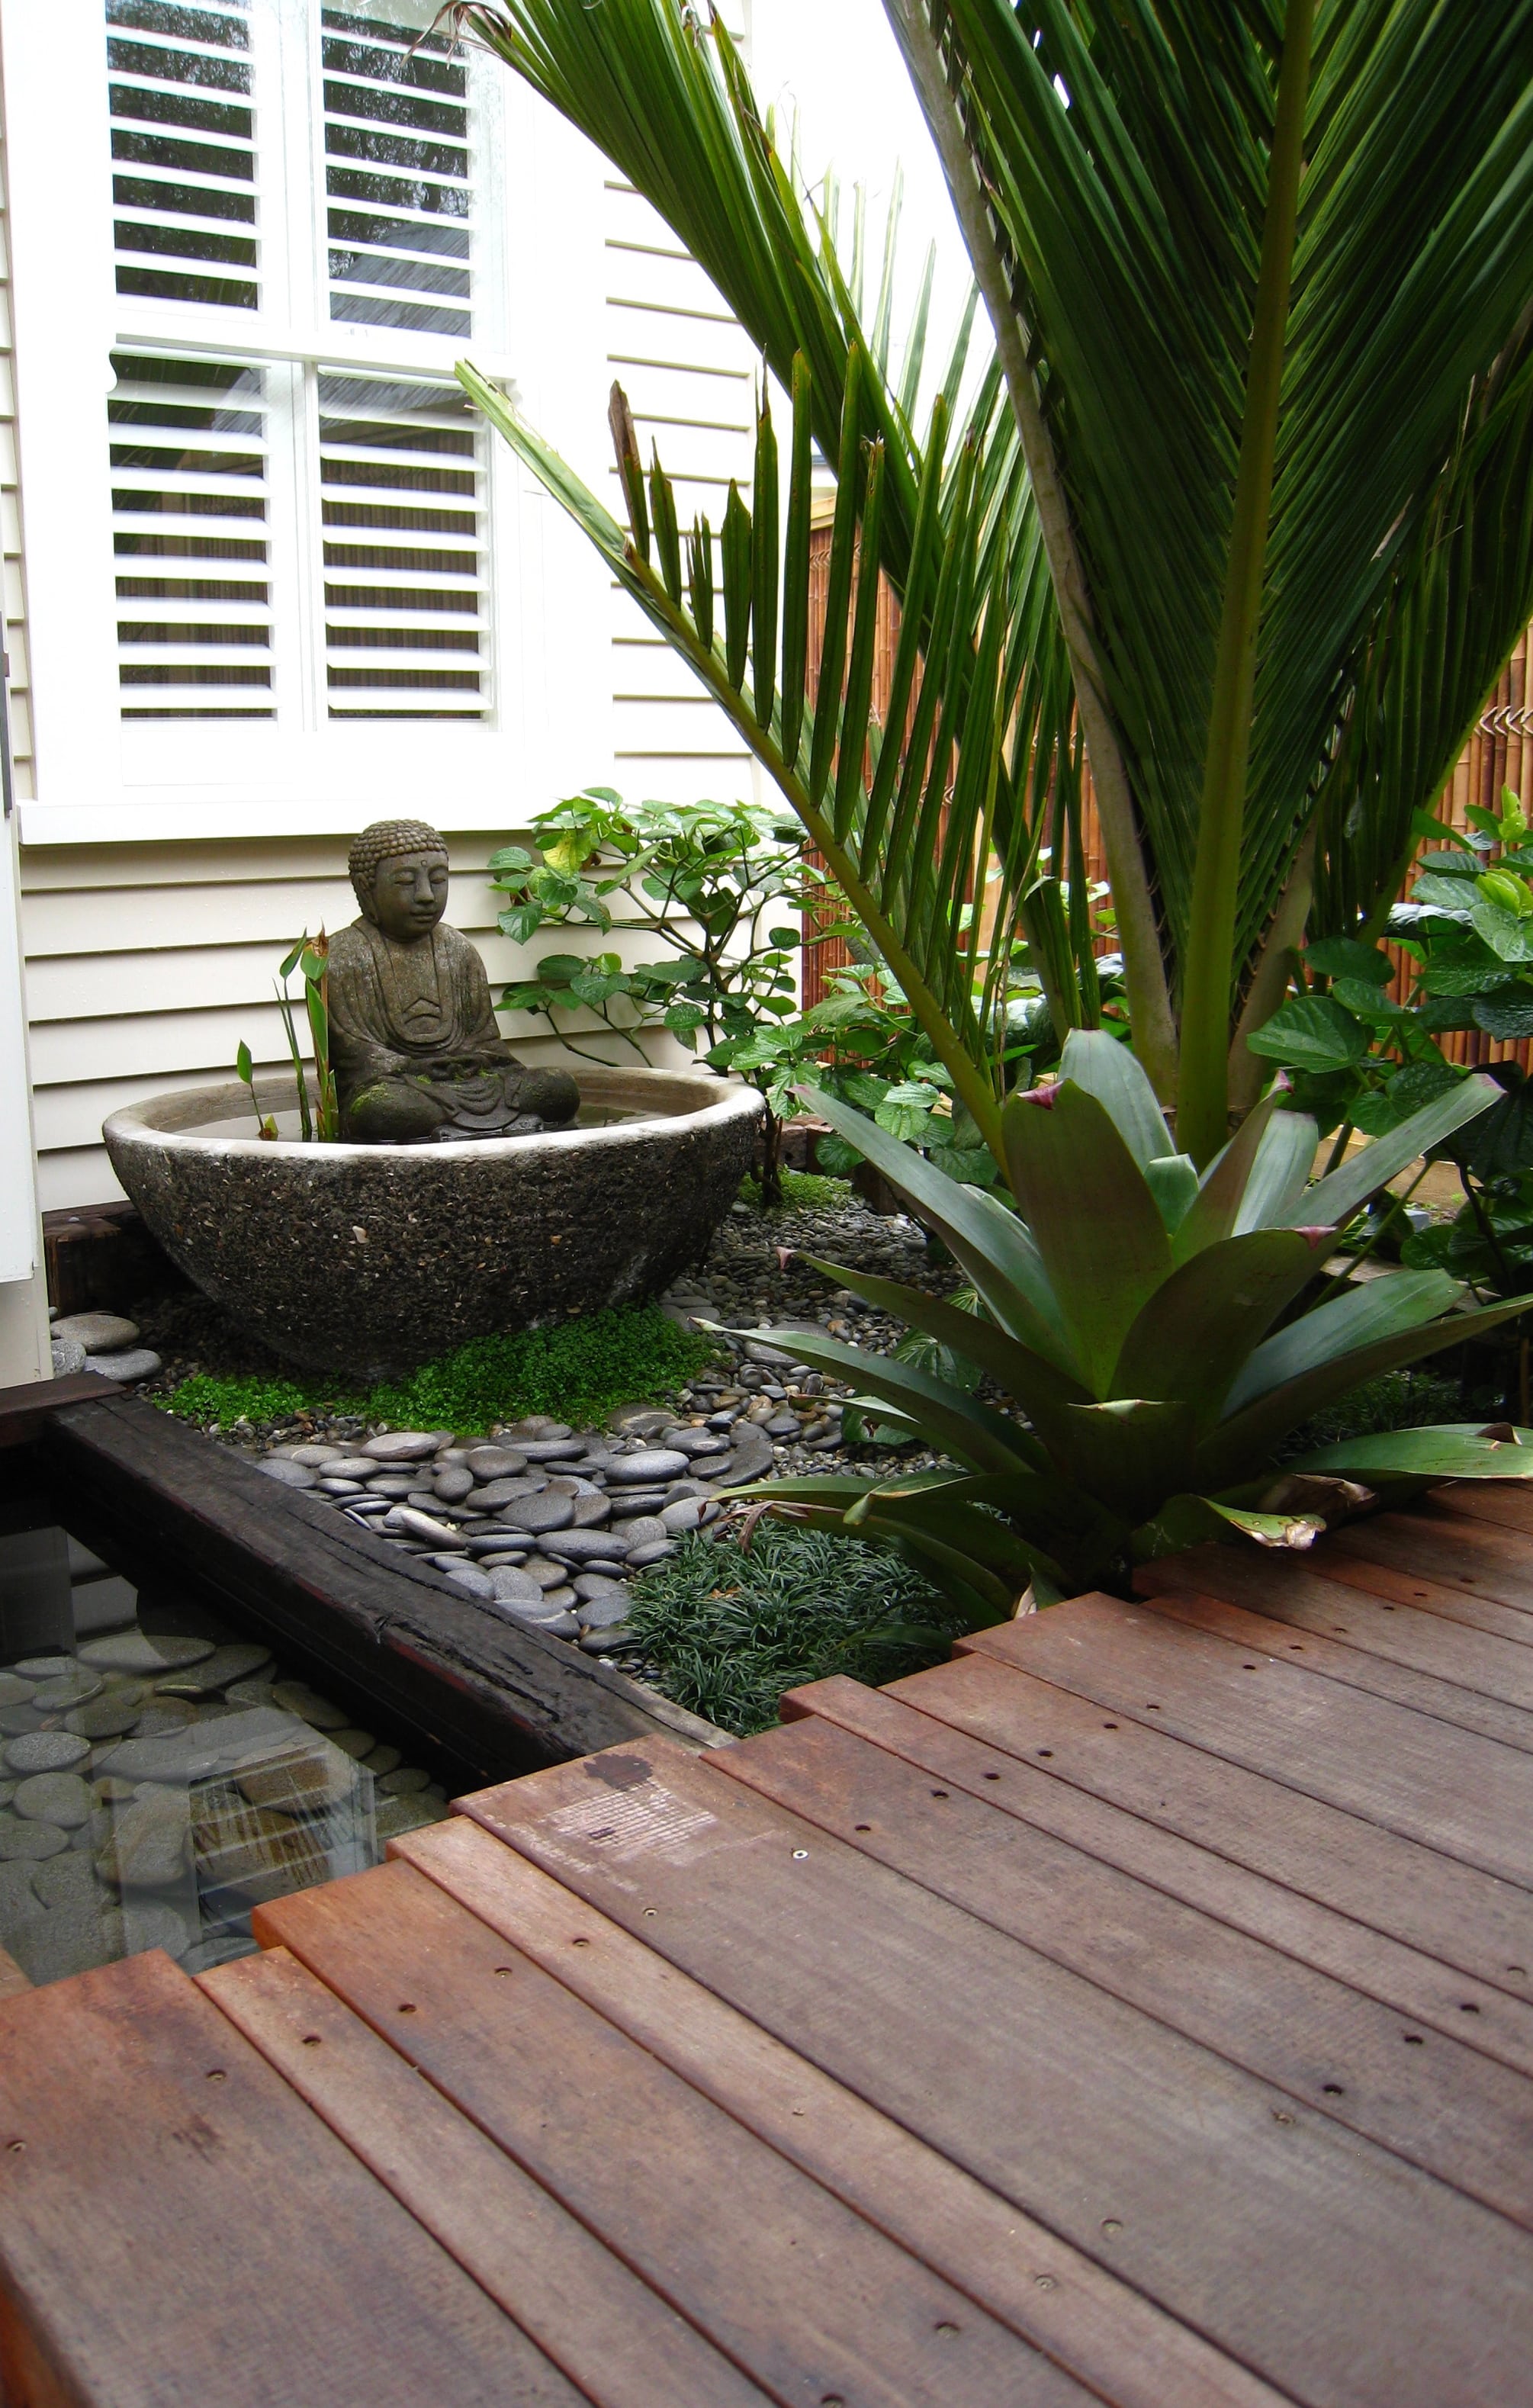 Buddha and bowl, Nikau palm, landscape design